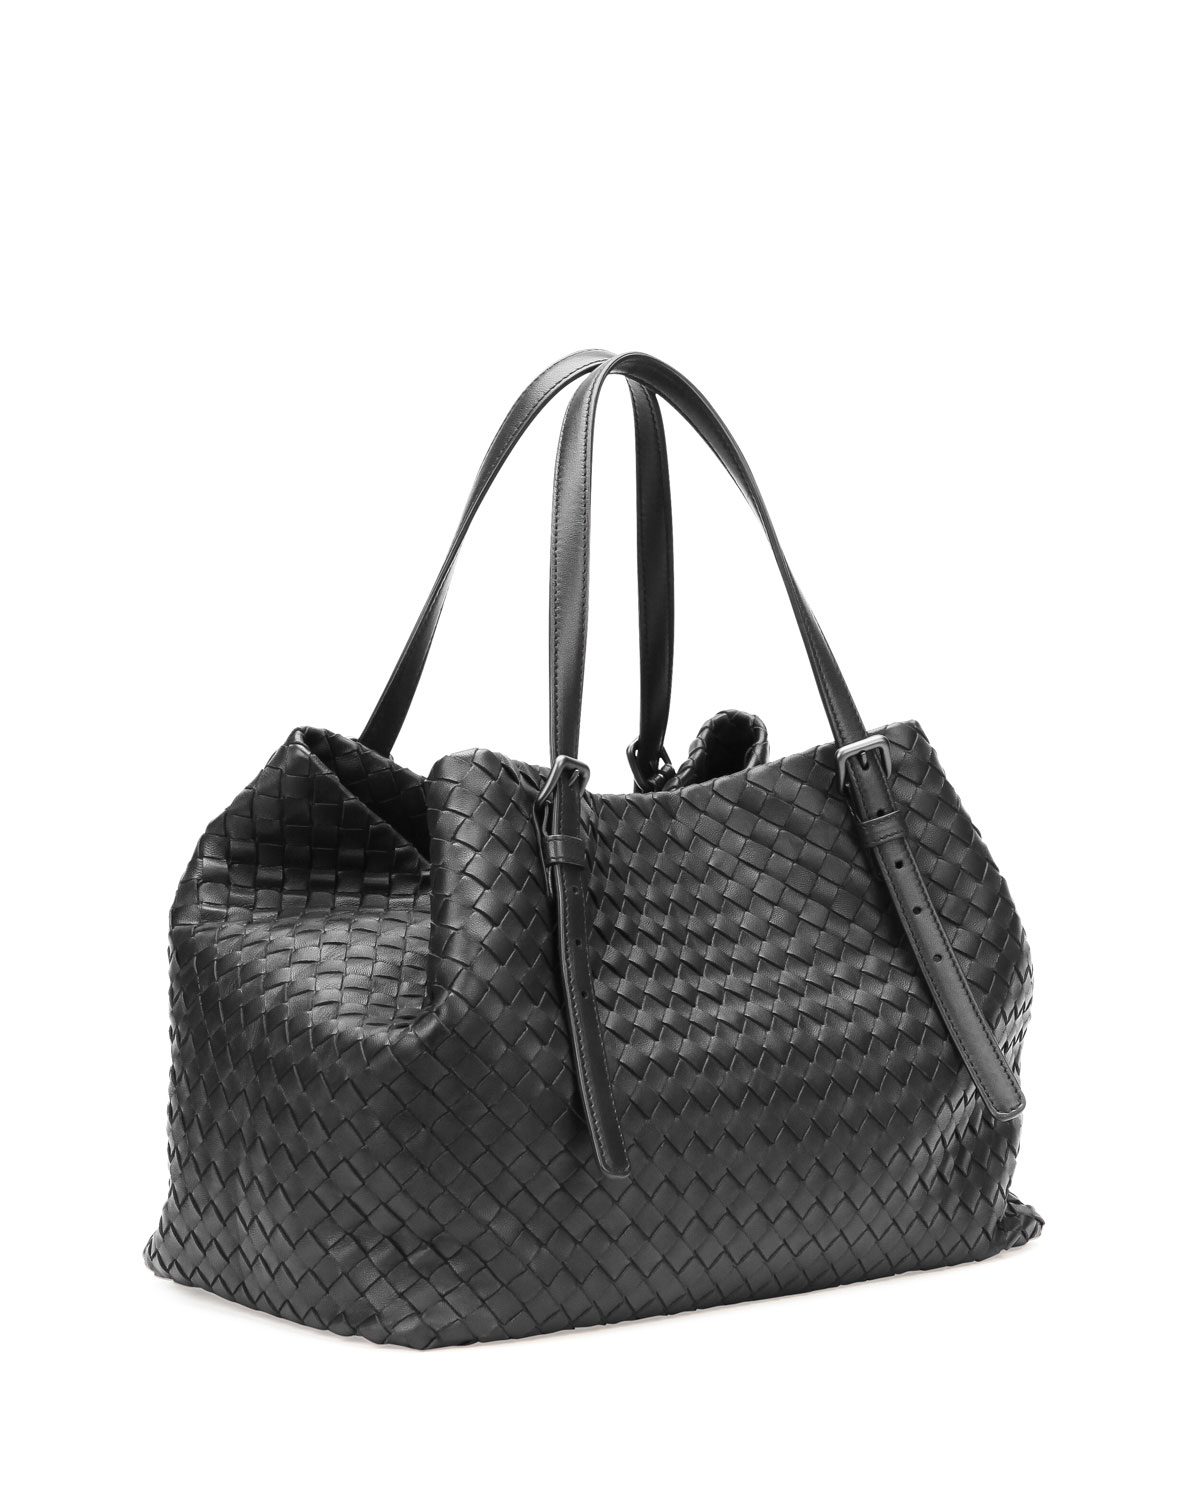 Bottega veneta A-shape Woven Tote Bag in Black - Save 16% | Lyst